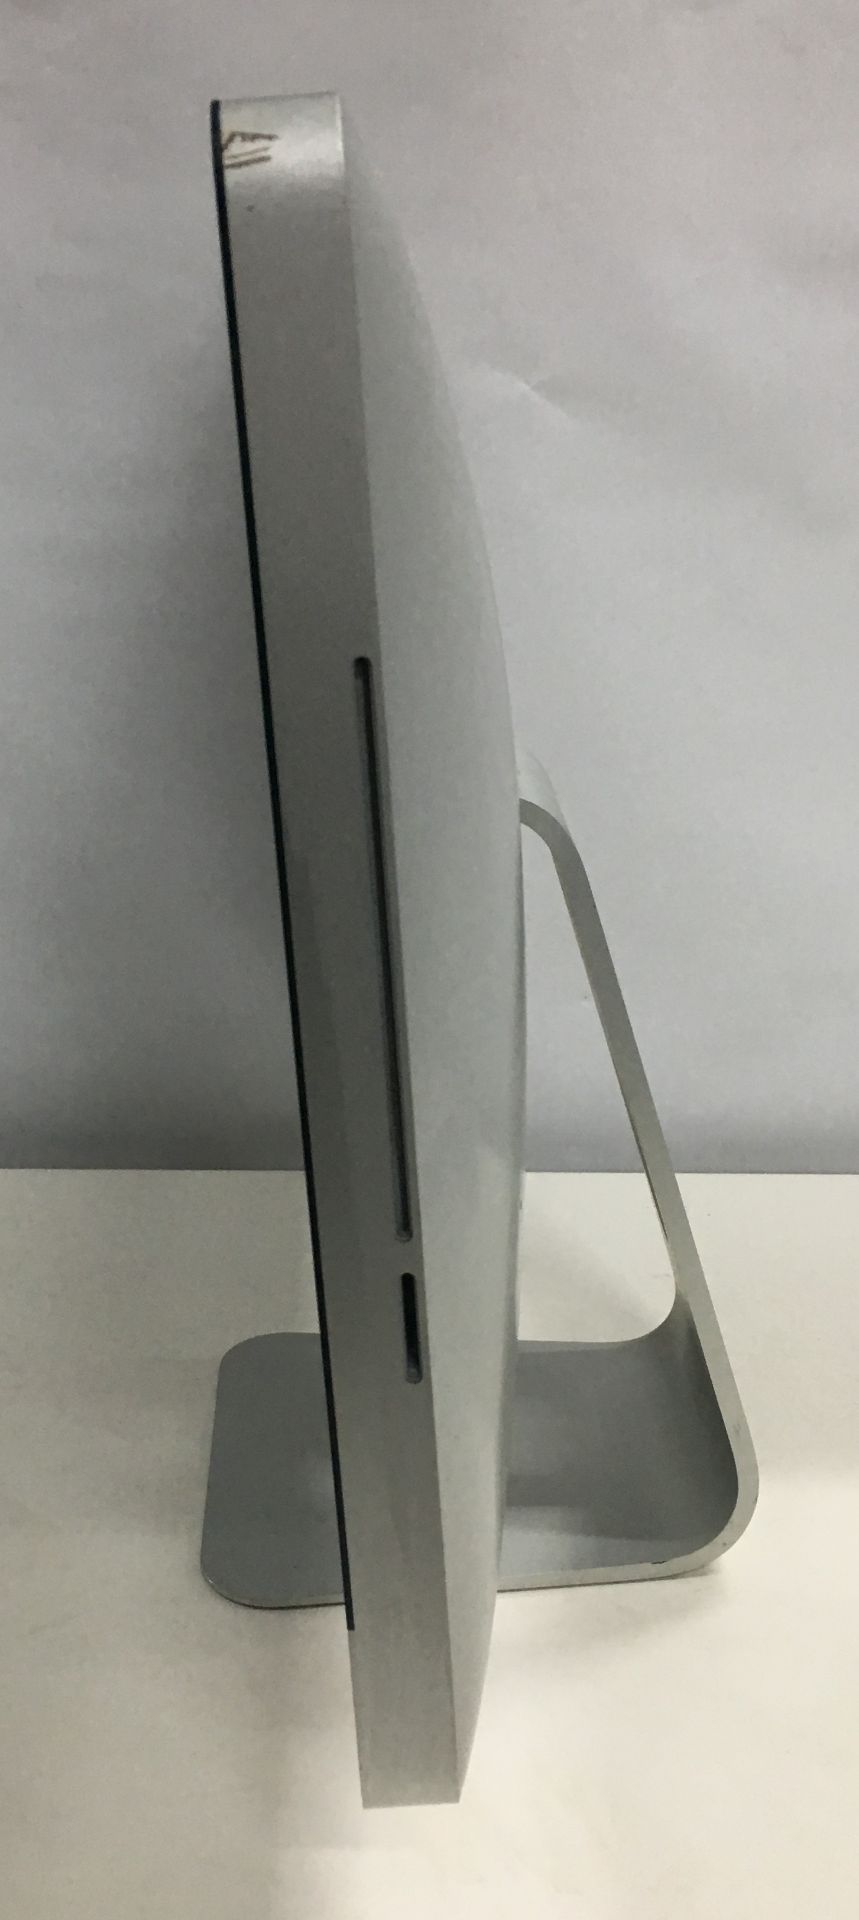 Aple iMac 21.5" Computer Core i5 2.5GHz 4GB Ram, 500GB Hard Drive - Image 3 of 4